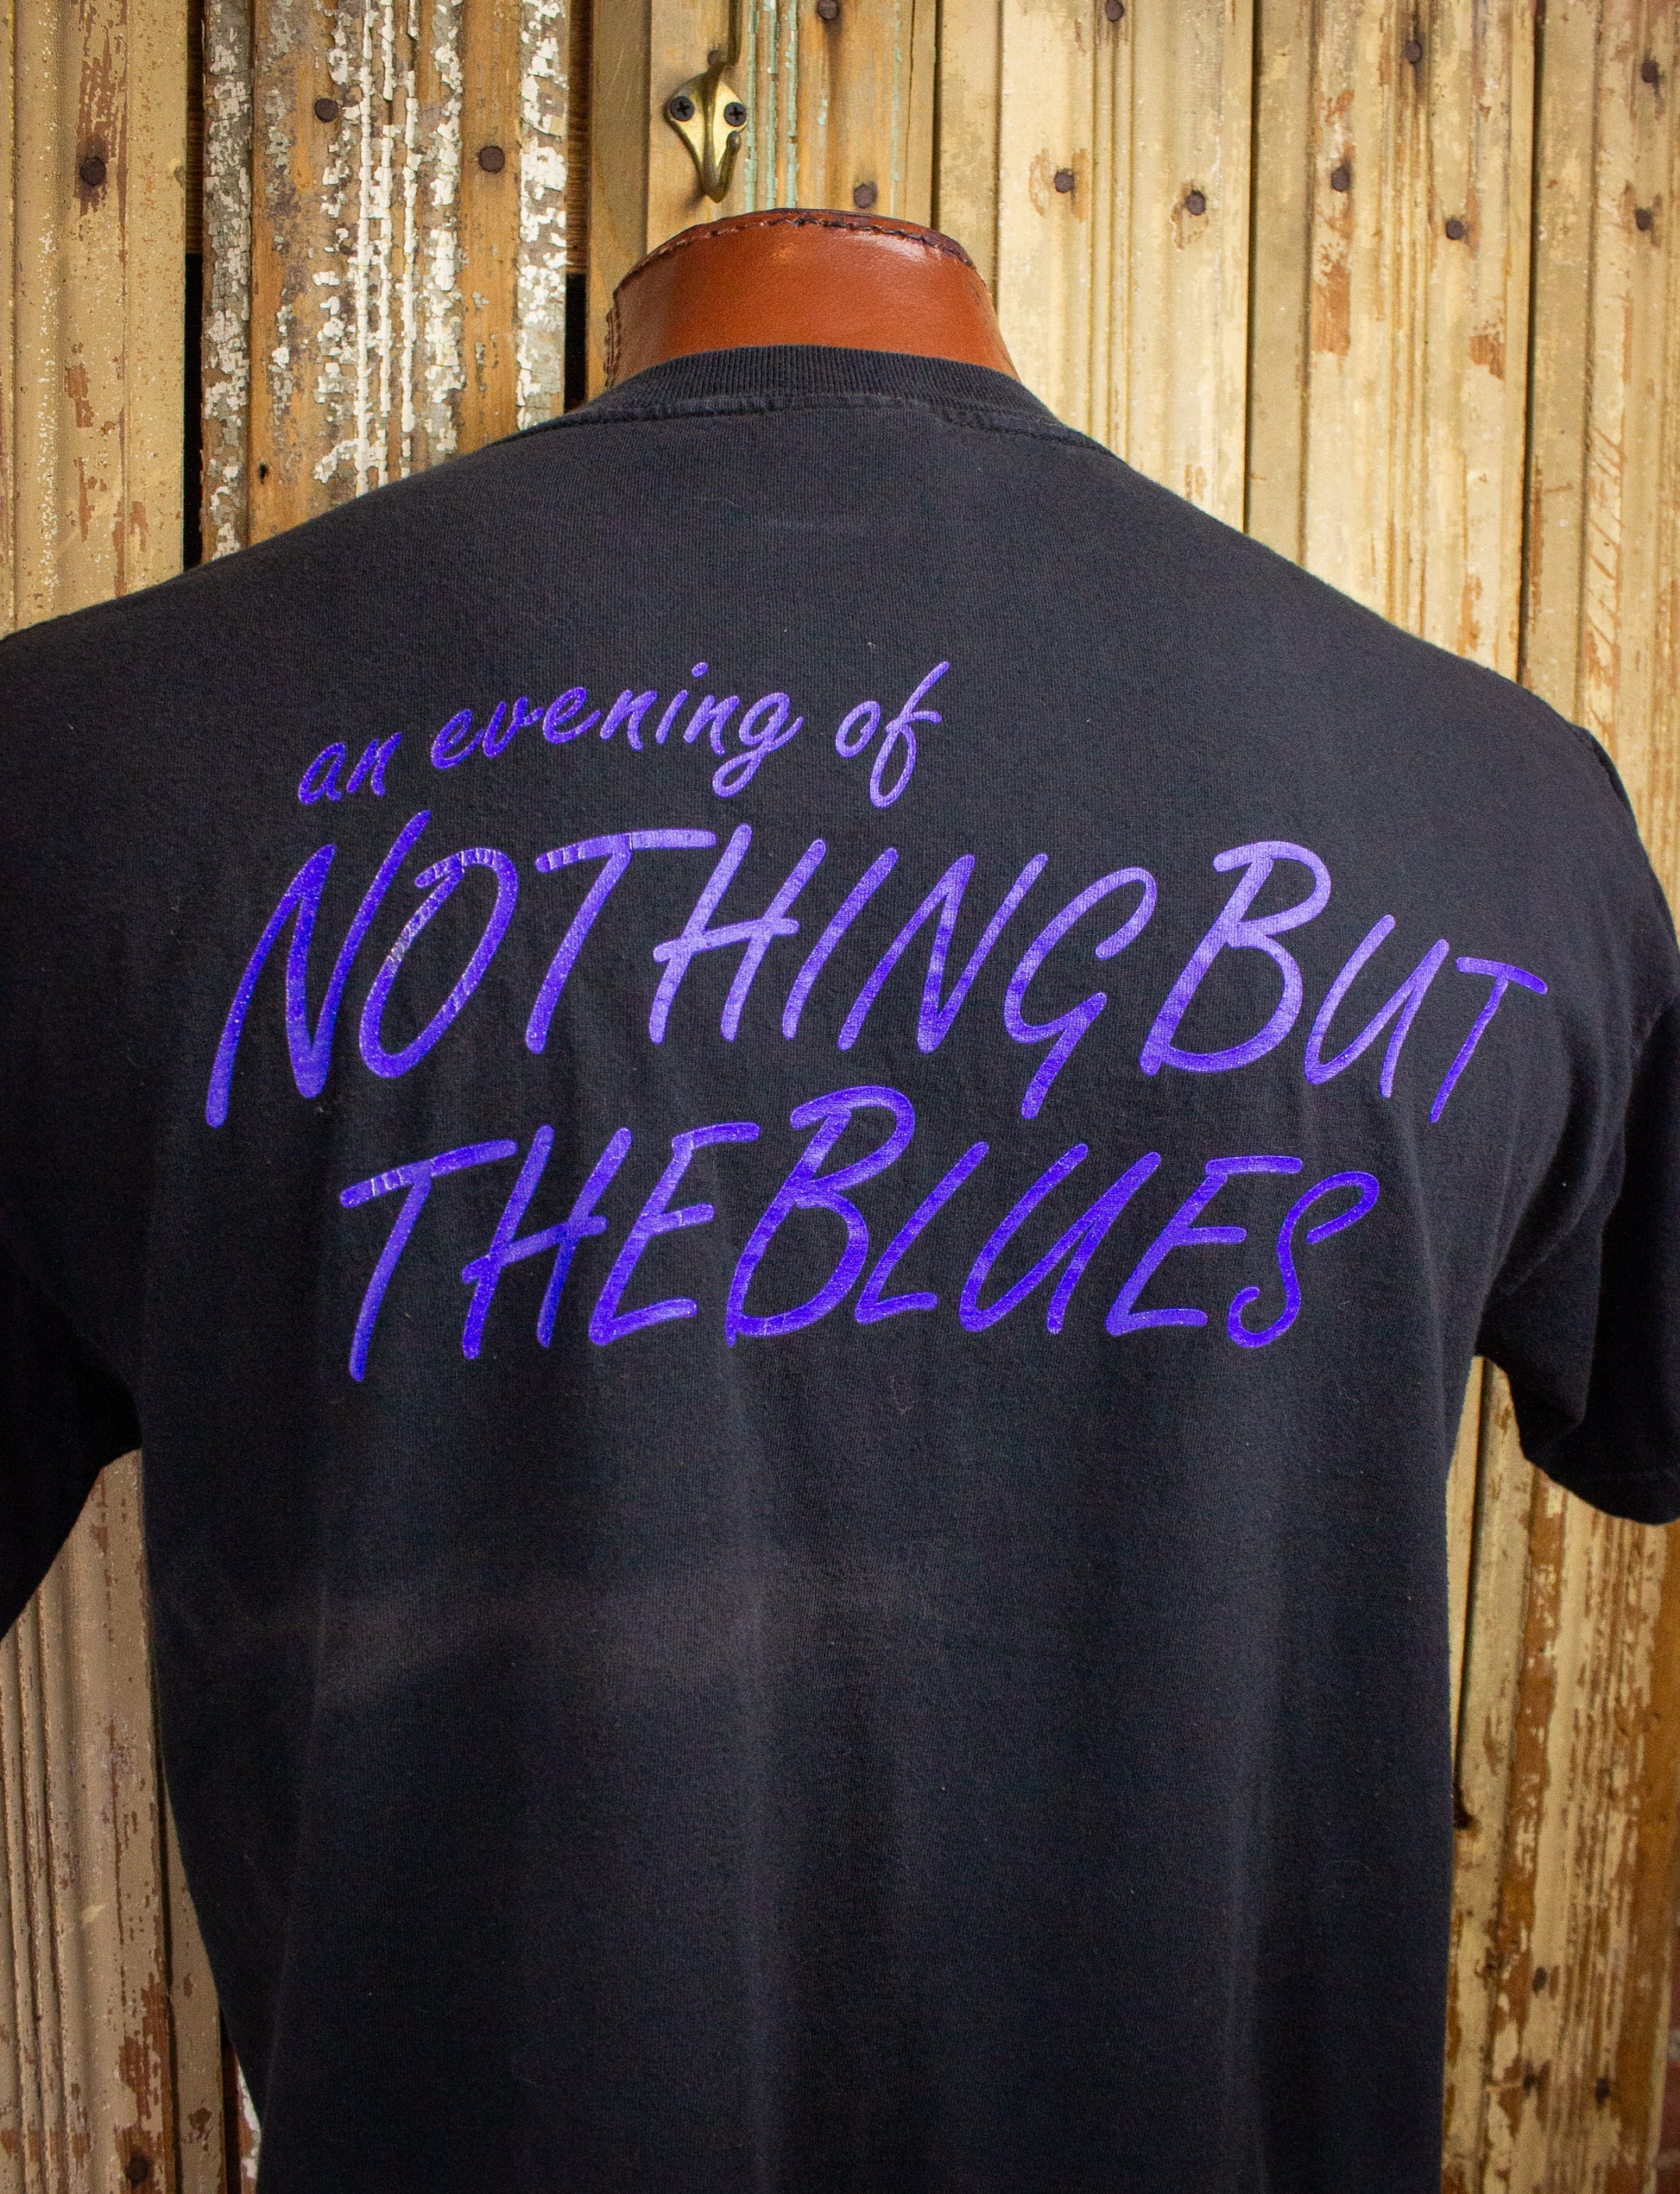 Vintage Eric Clapton Nothing But The Blues Concert T Shirt 90s Black XL